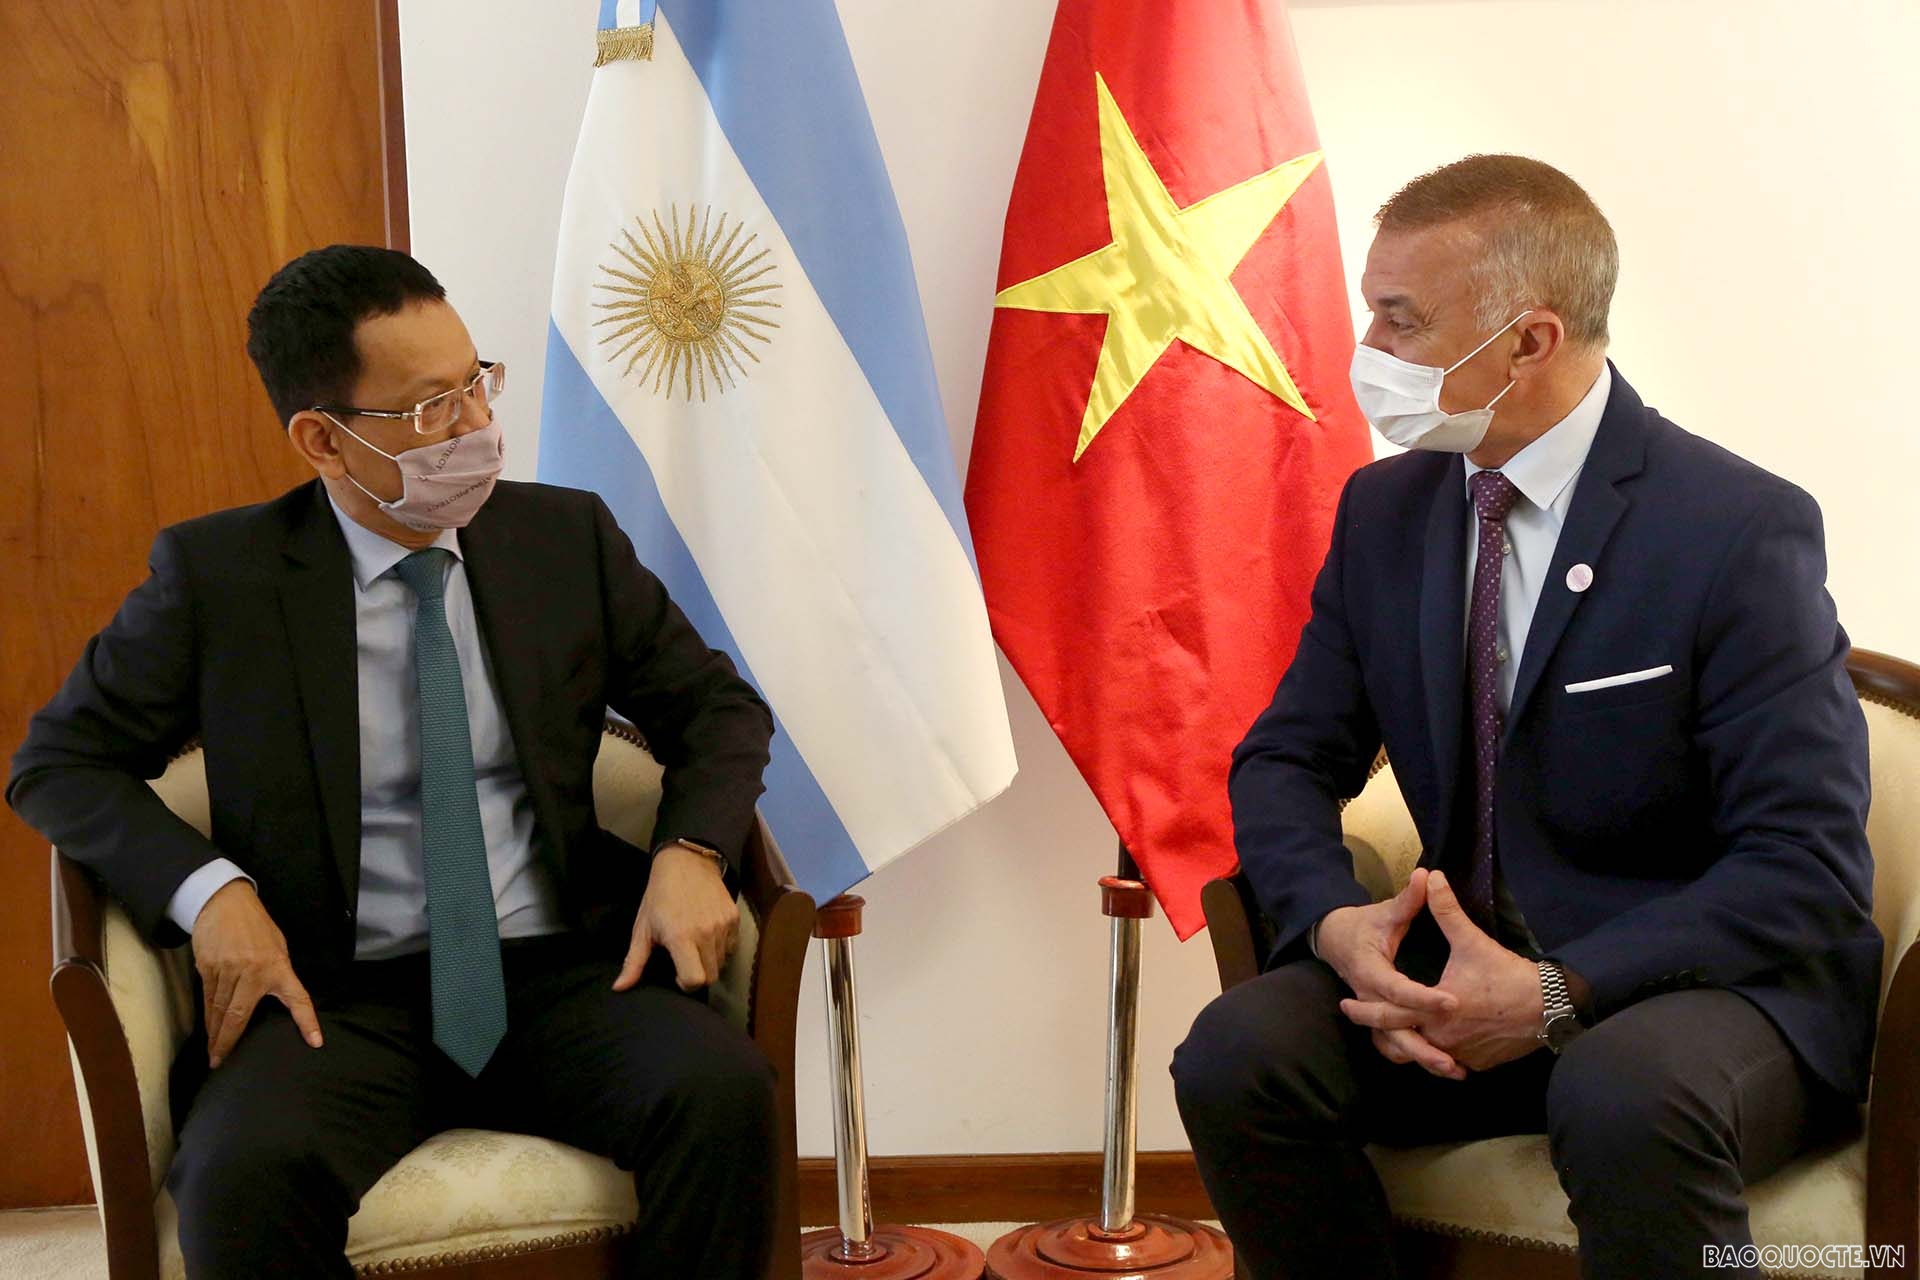 Viet Nam seeks stronger partnership with Argentine province